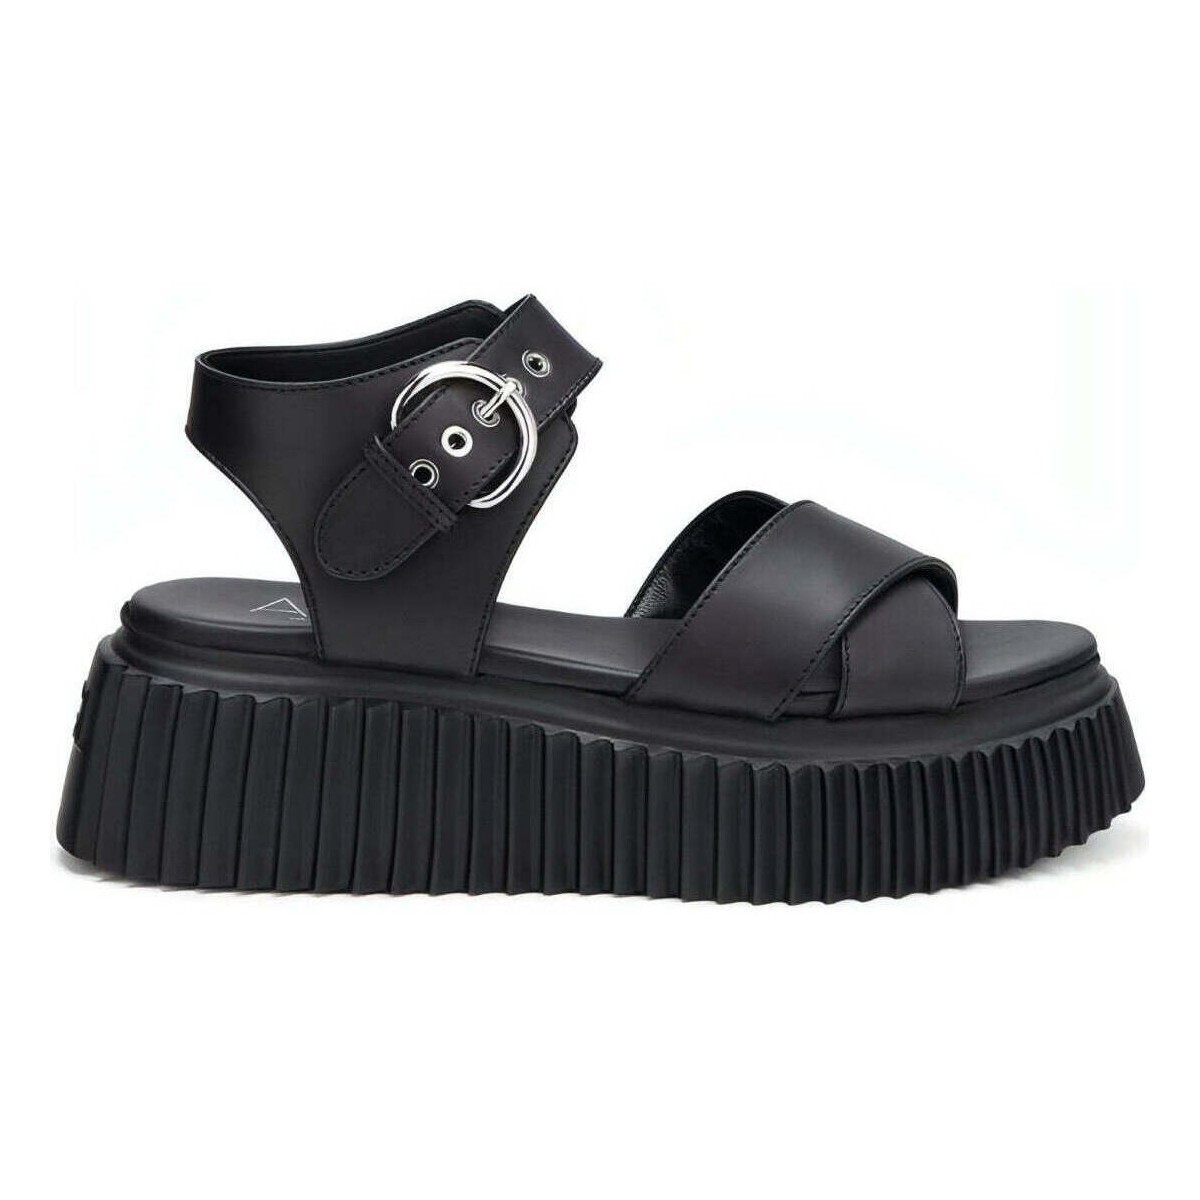 Zapatos Mujer Sandalias de deporte Agl  Negro